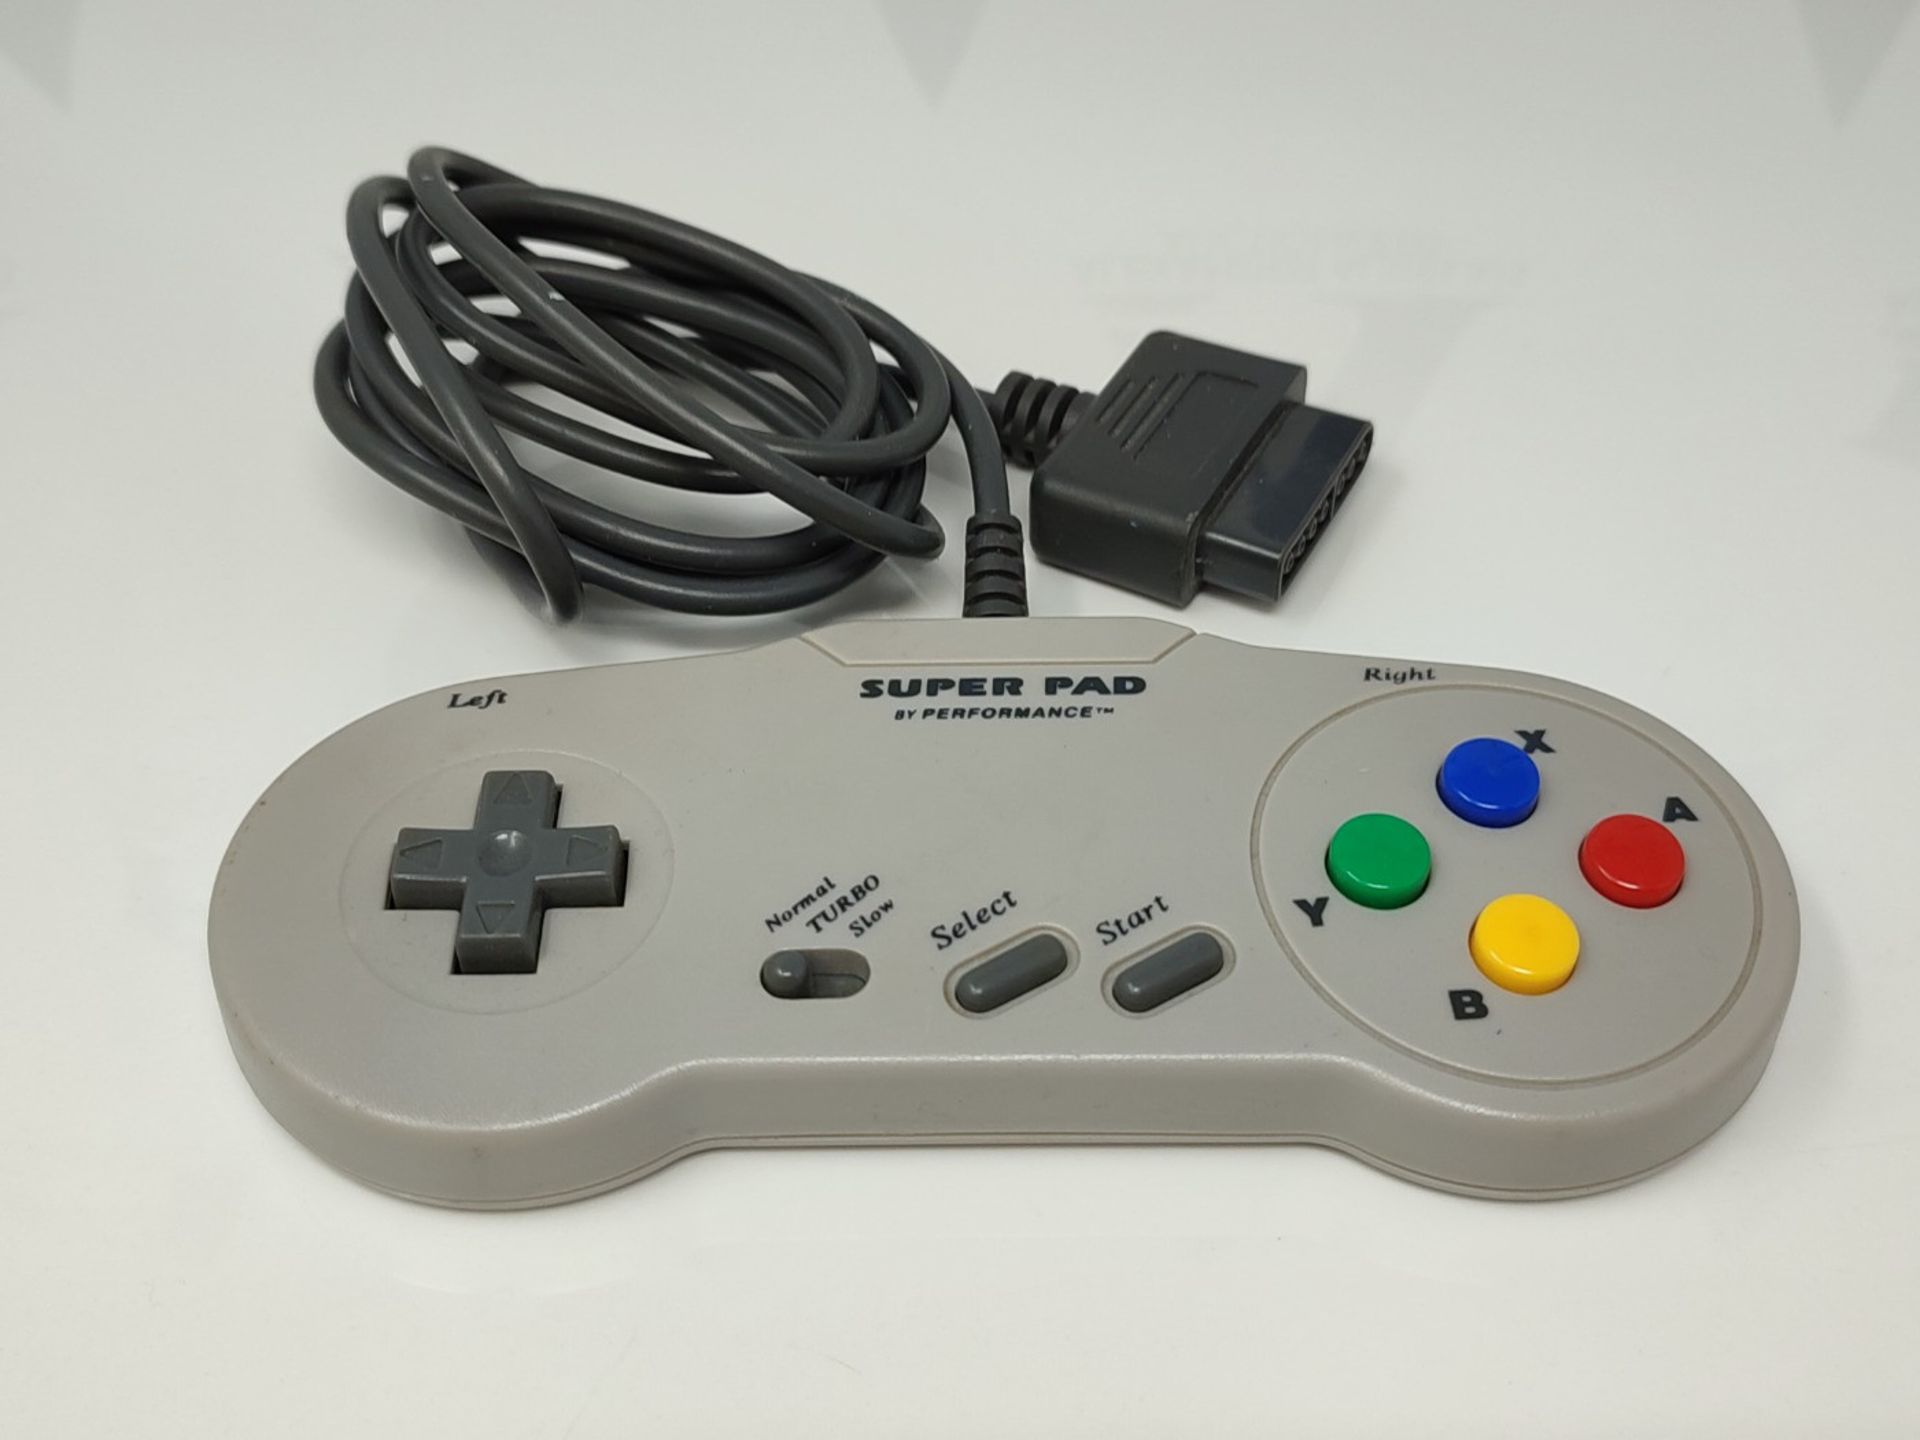 Nintendo Super Pad controller - Image 2 of 2